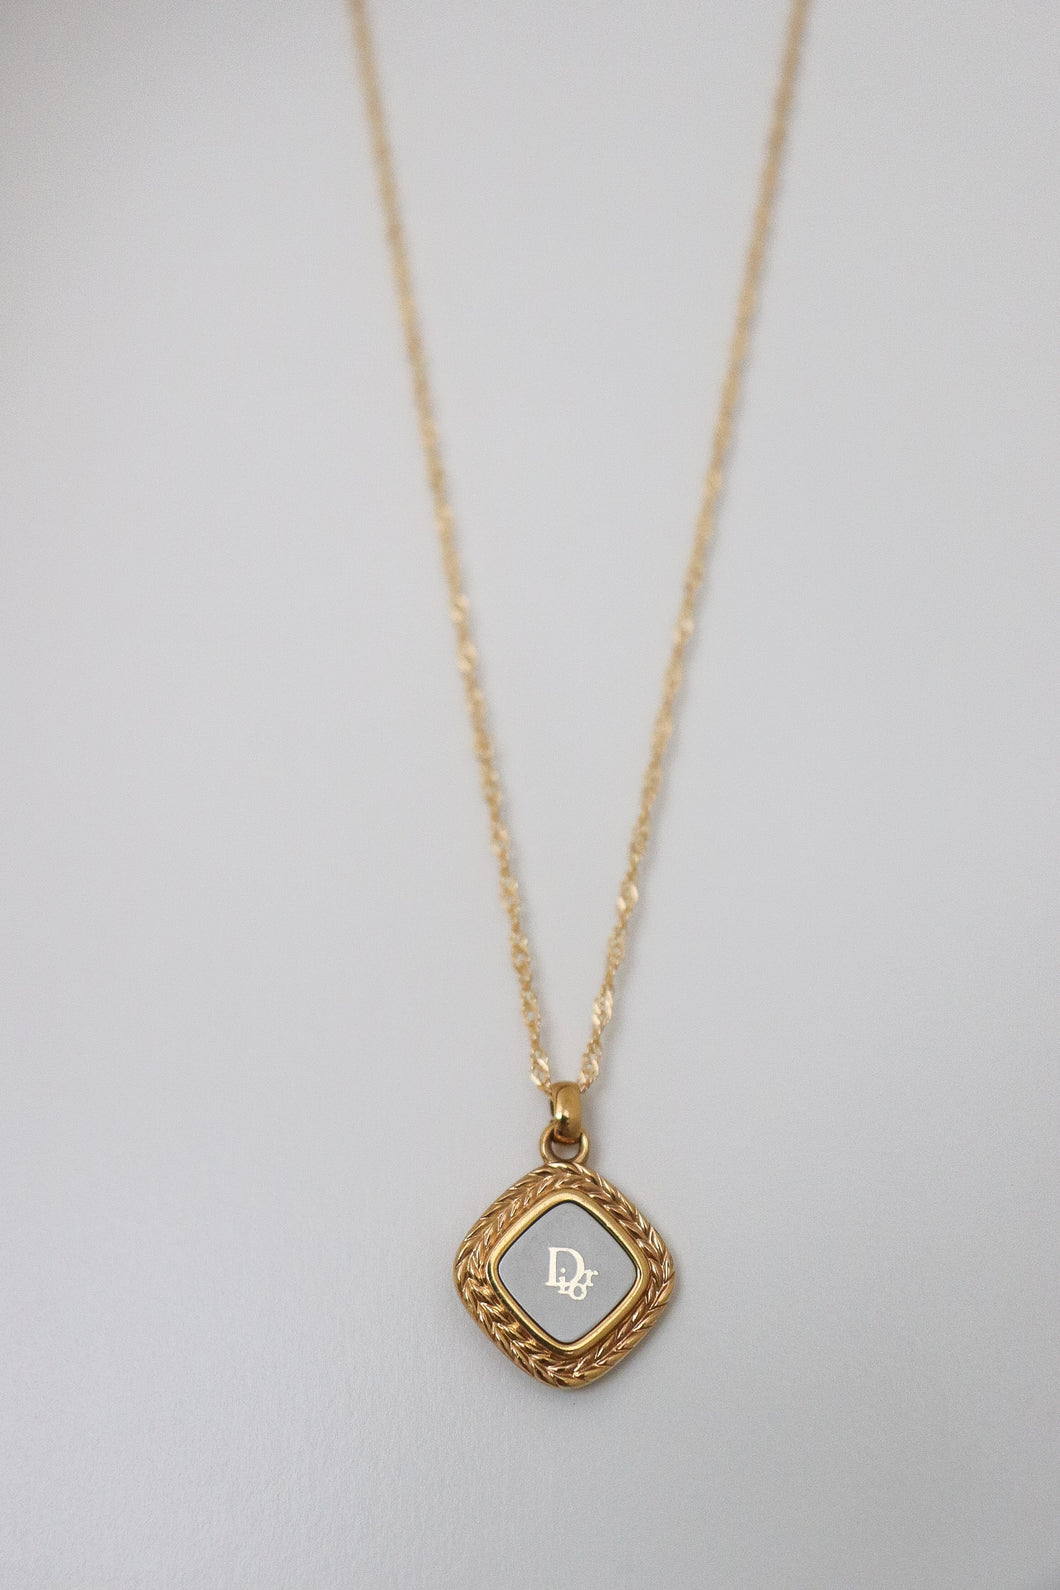 Dior golden/white necklace